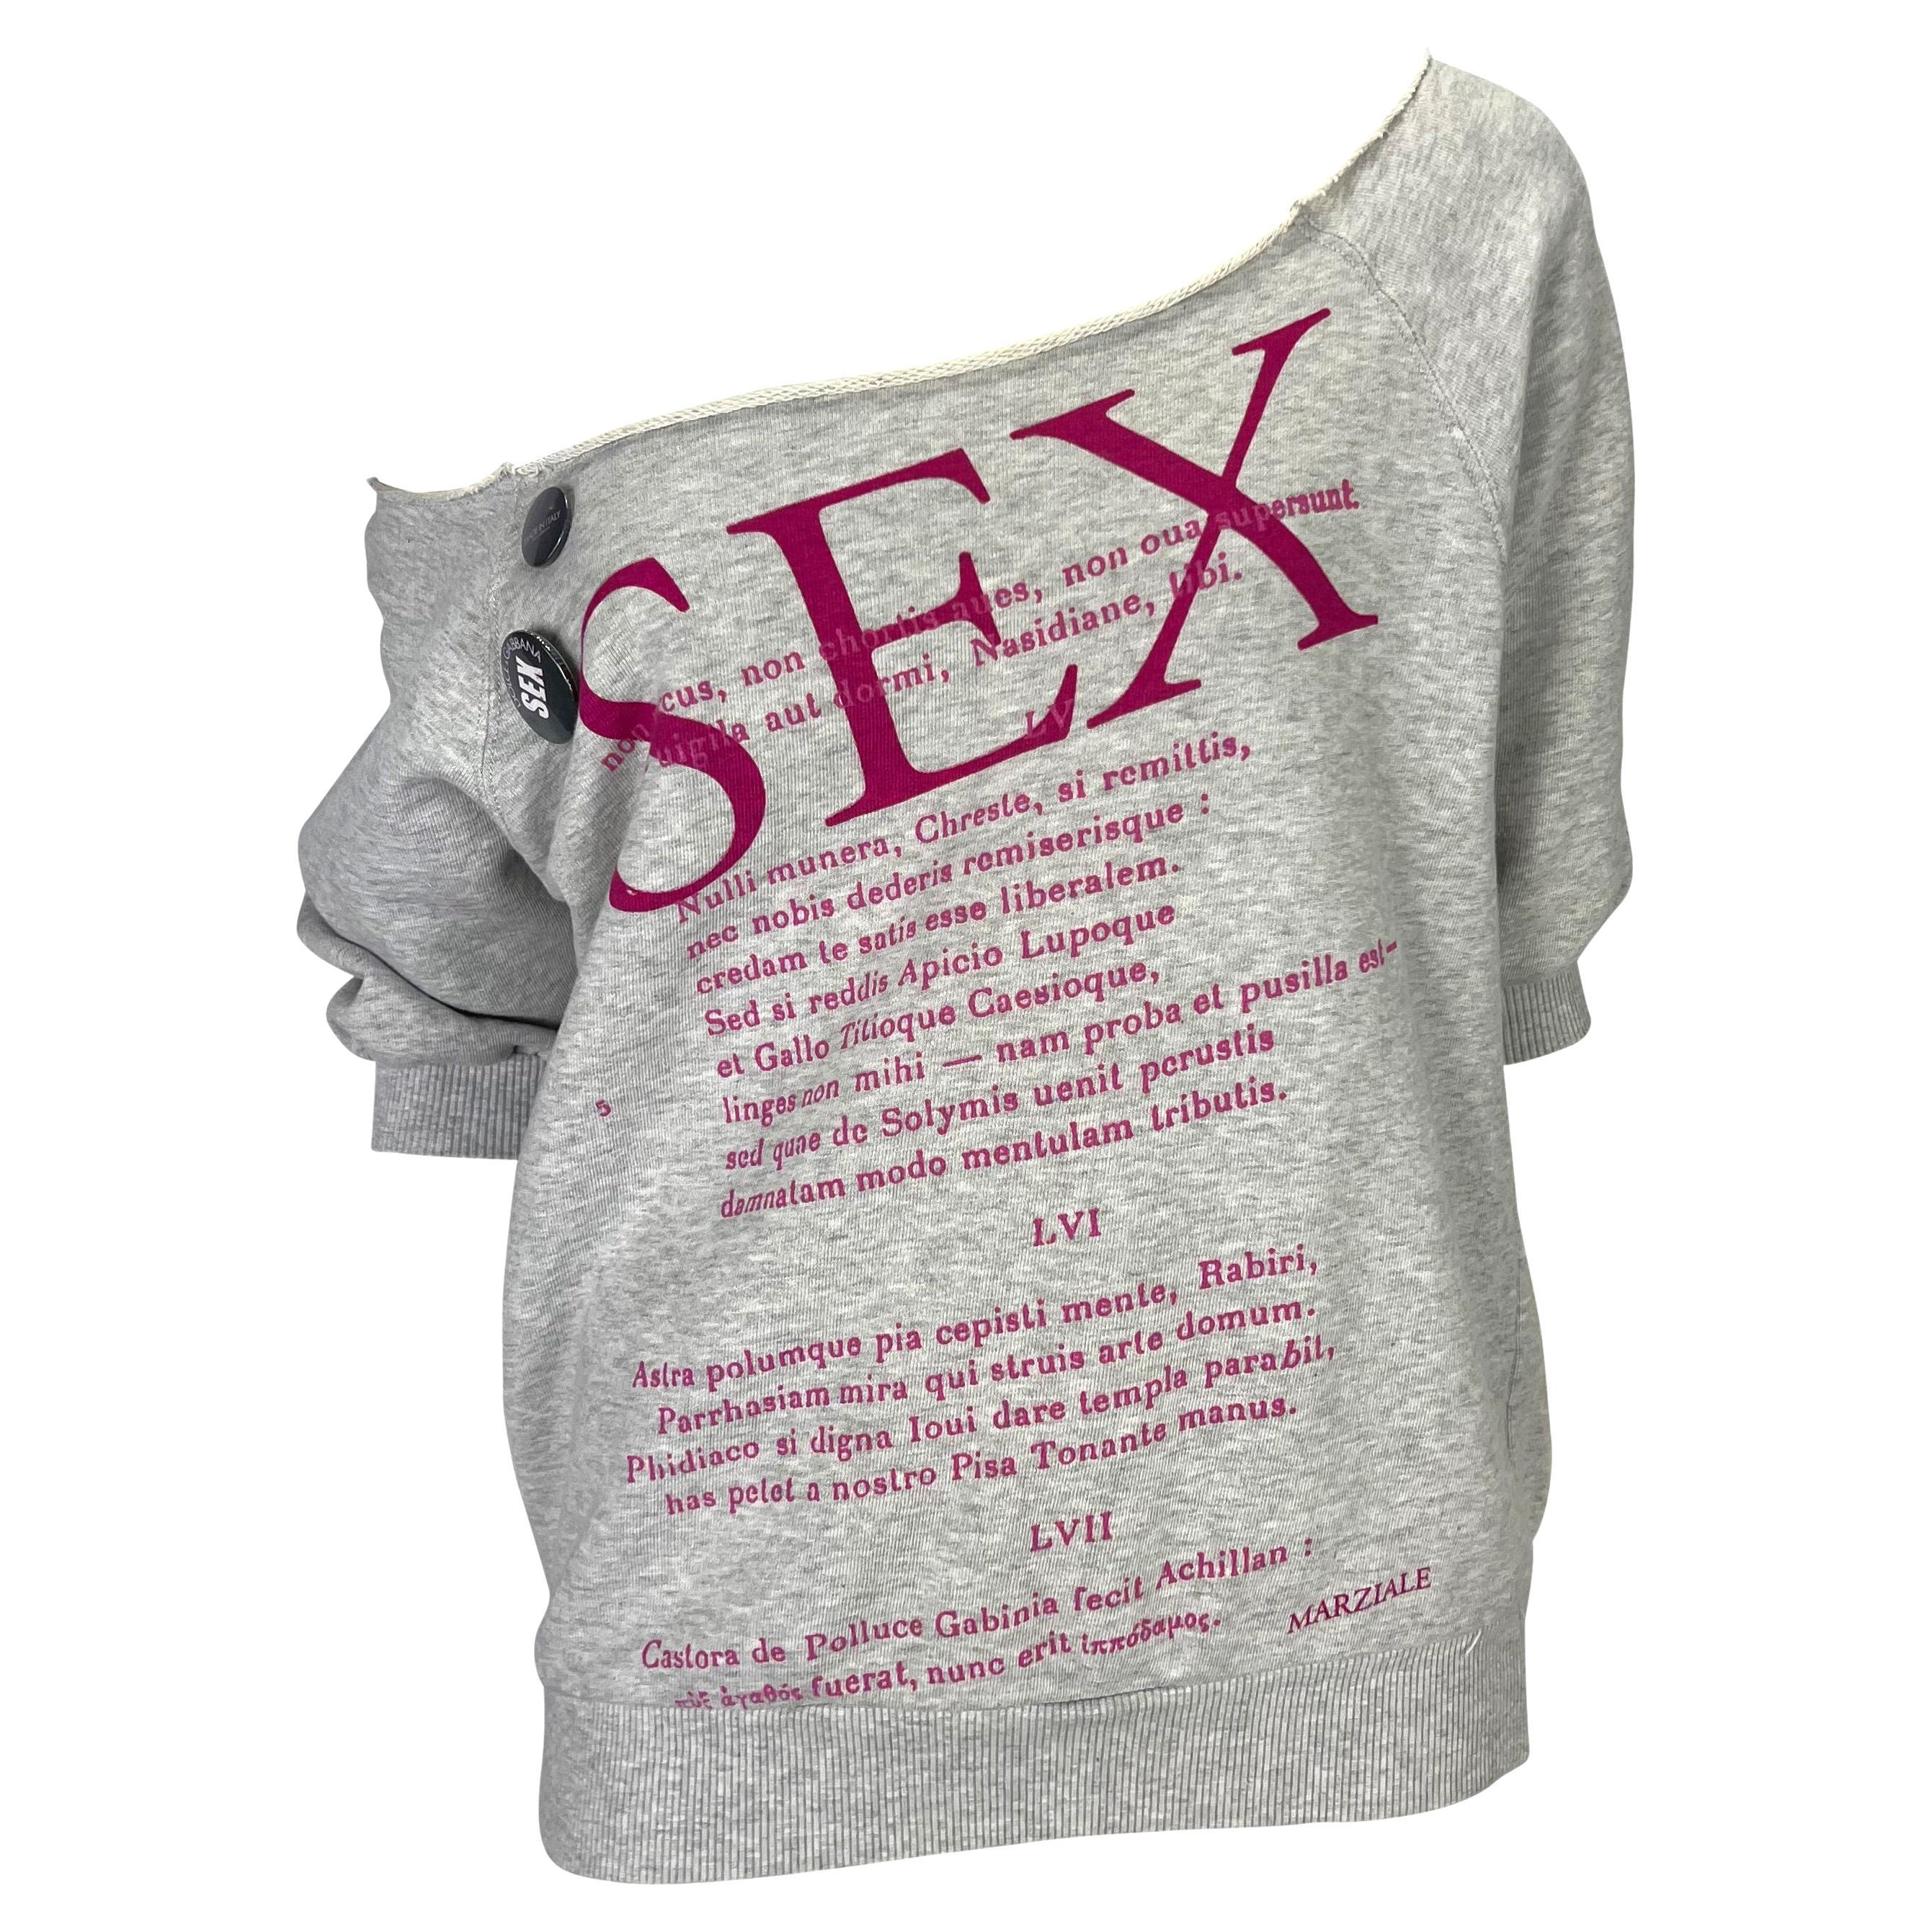 S/S 2003 Dolce & Gabbana 'Sex & Love' Runway Print Pin Cropped Sweatshirt Top